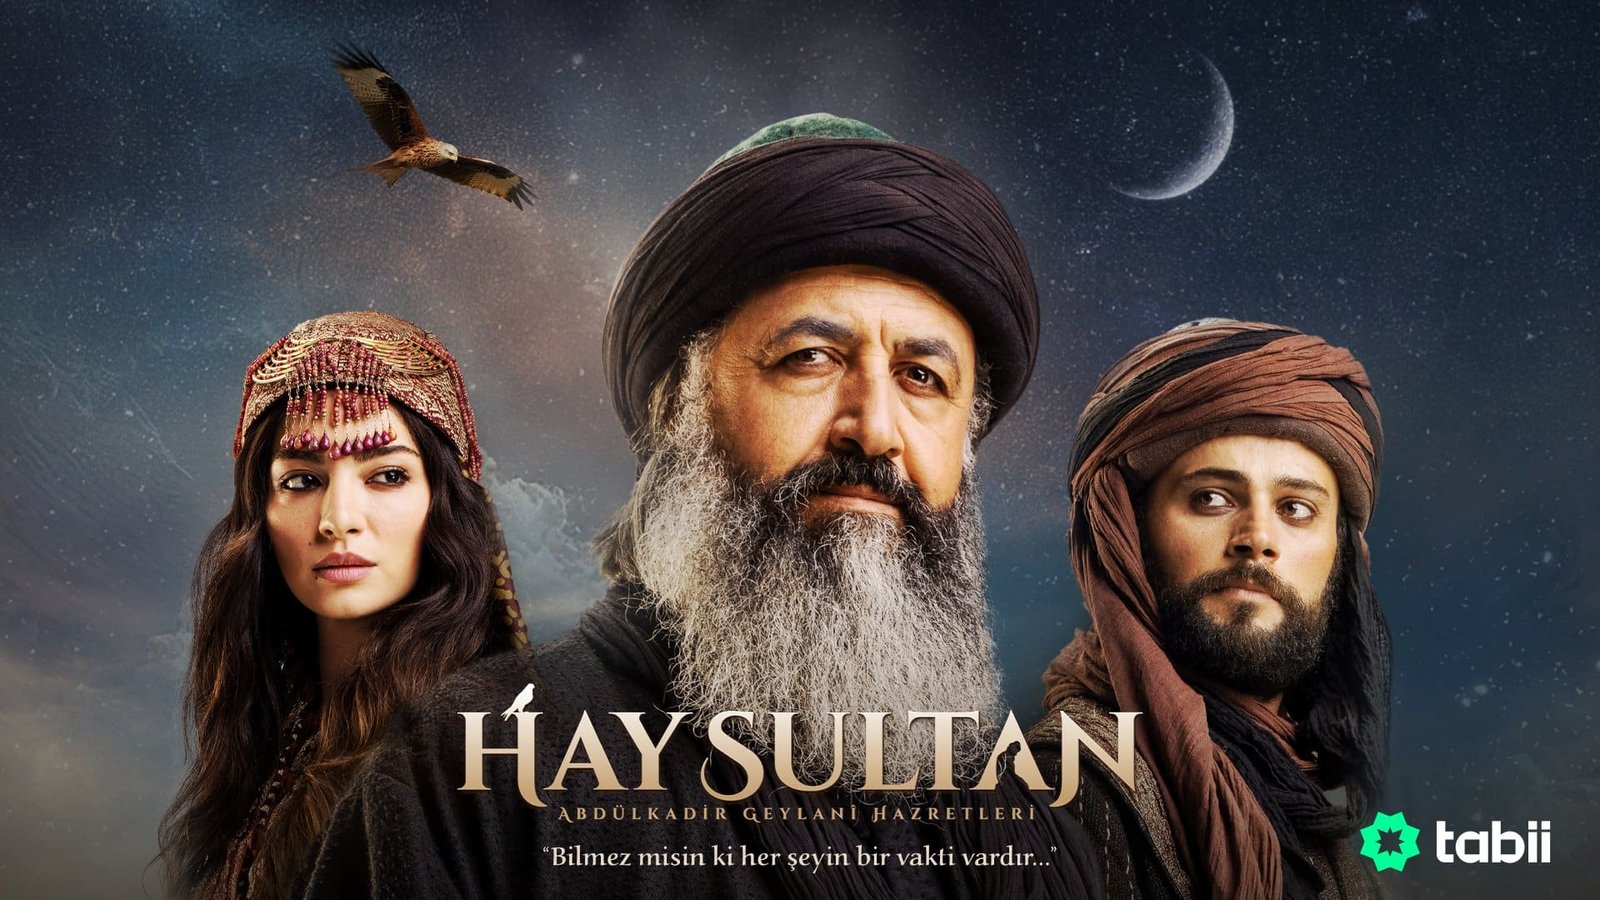 Hay Sultan Abdulkadir Geylani Episode 4 English Subtitles